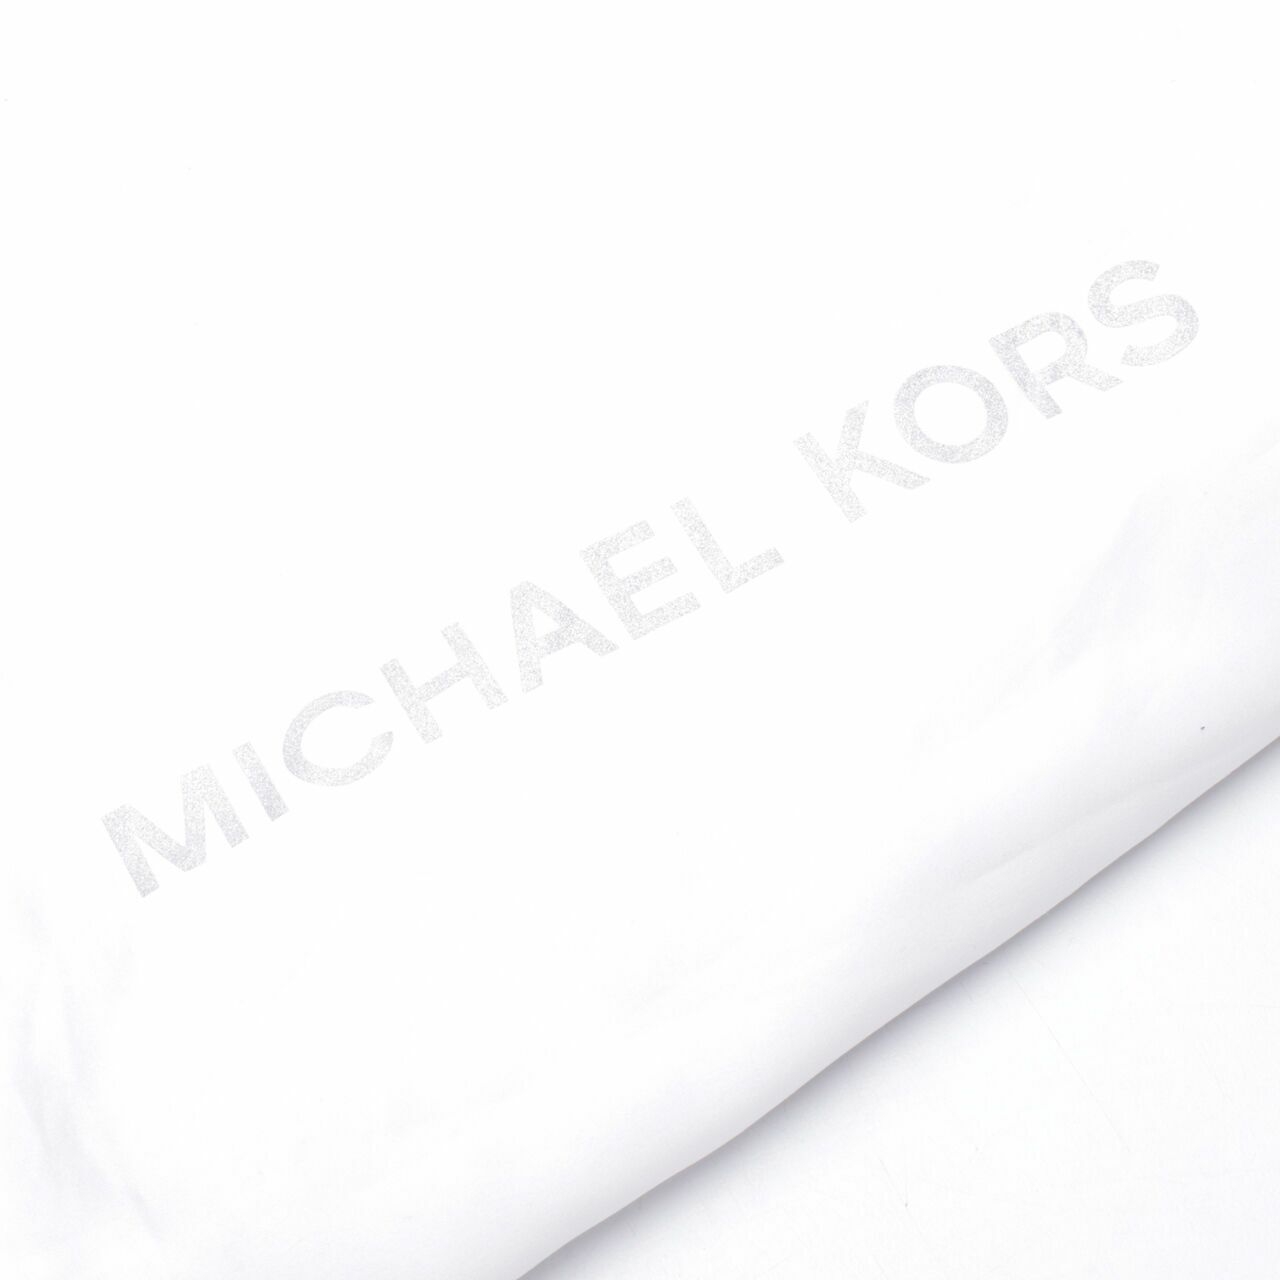 Michael Kors Gold Cynthia Pale Sling Bag